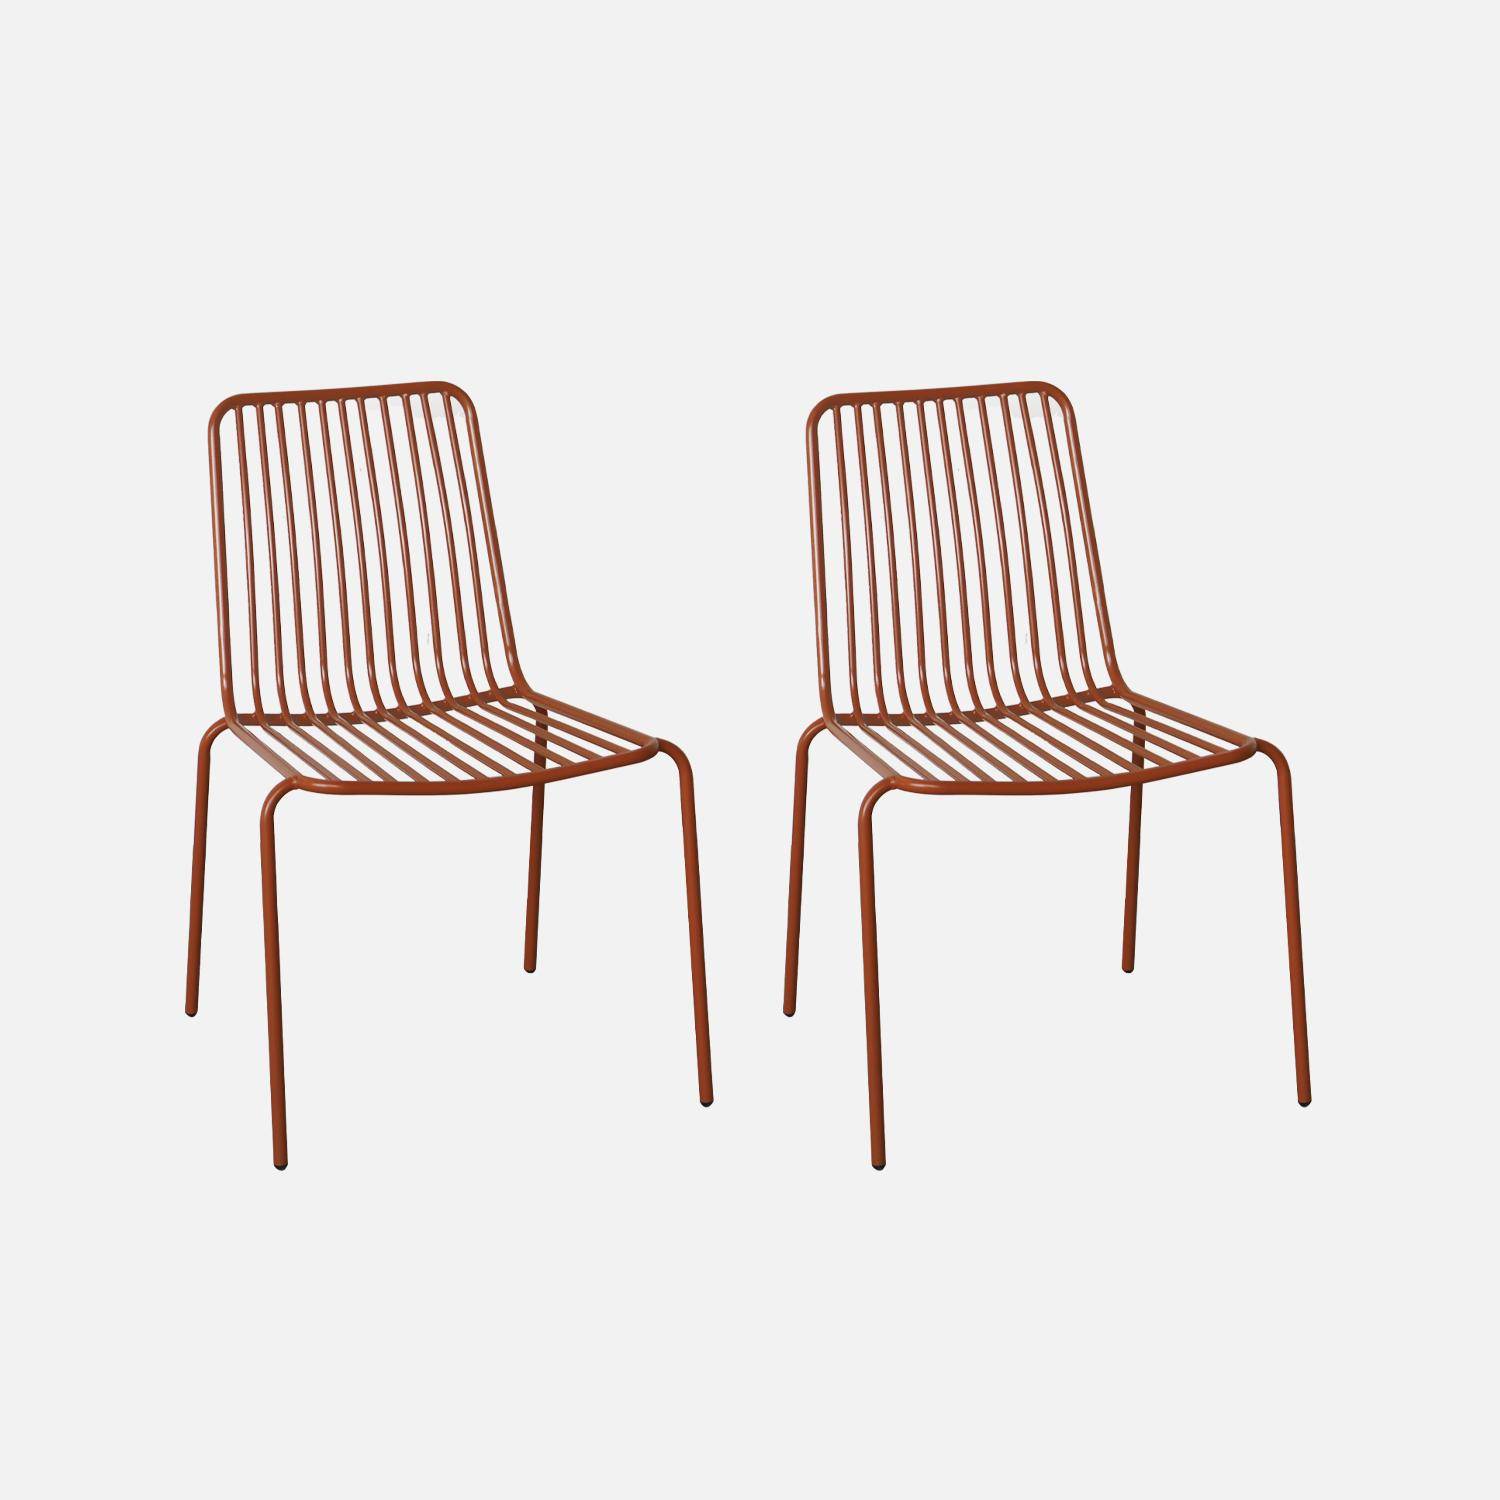 Juego de 2 sillas de jardín de acero terracota, apilables, diseño lineal,sweeek,Photo1